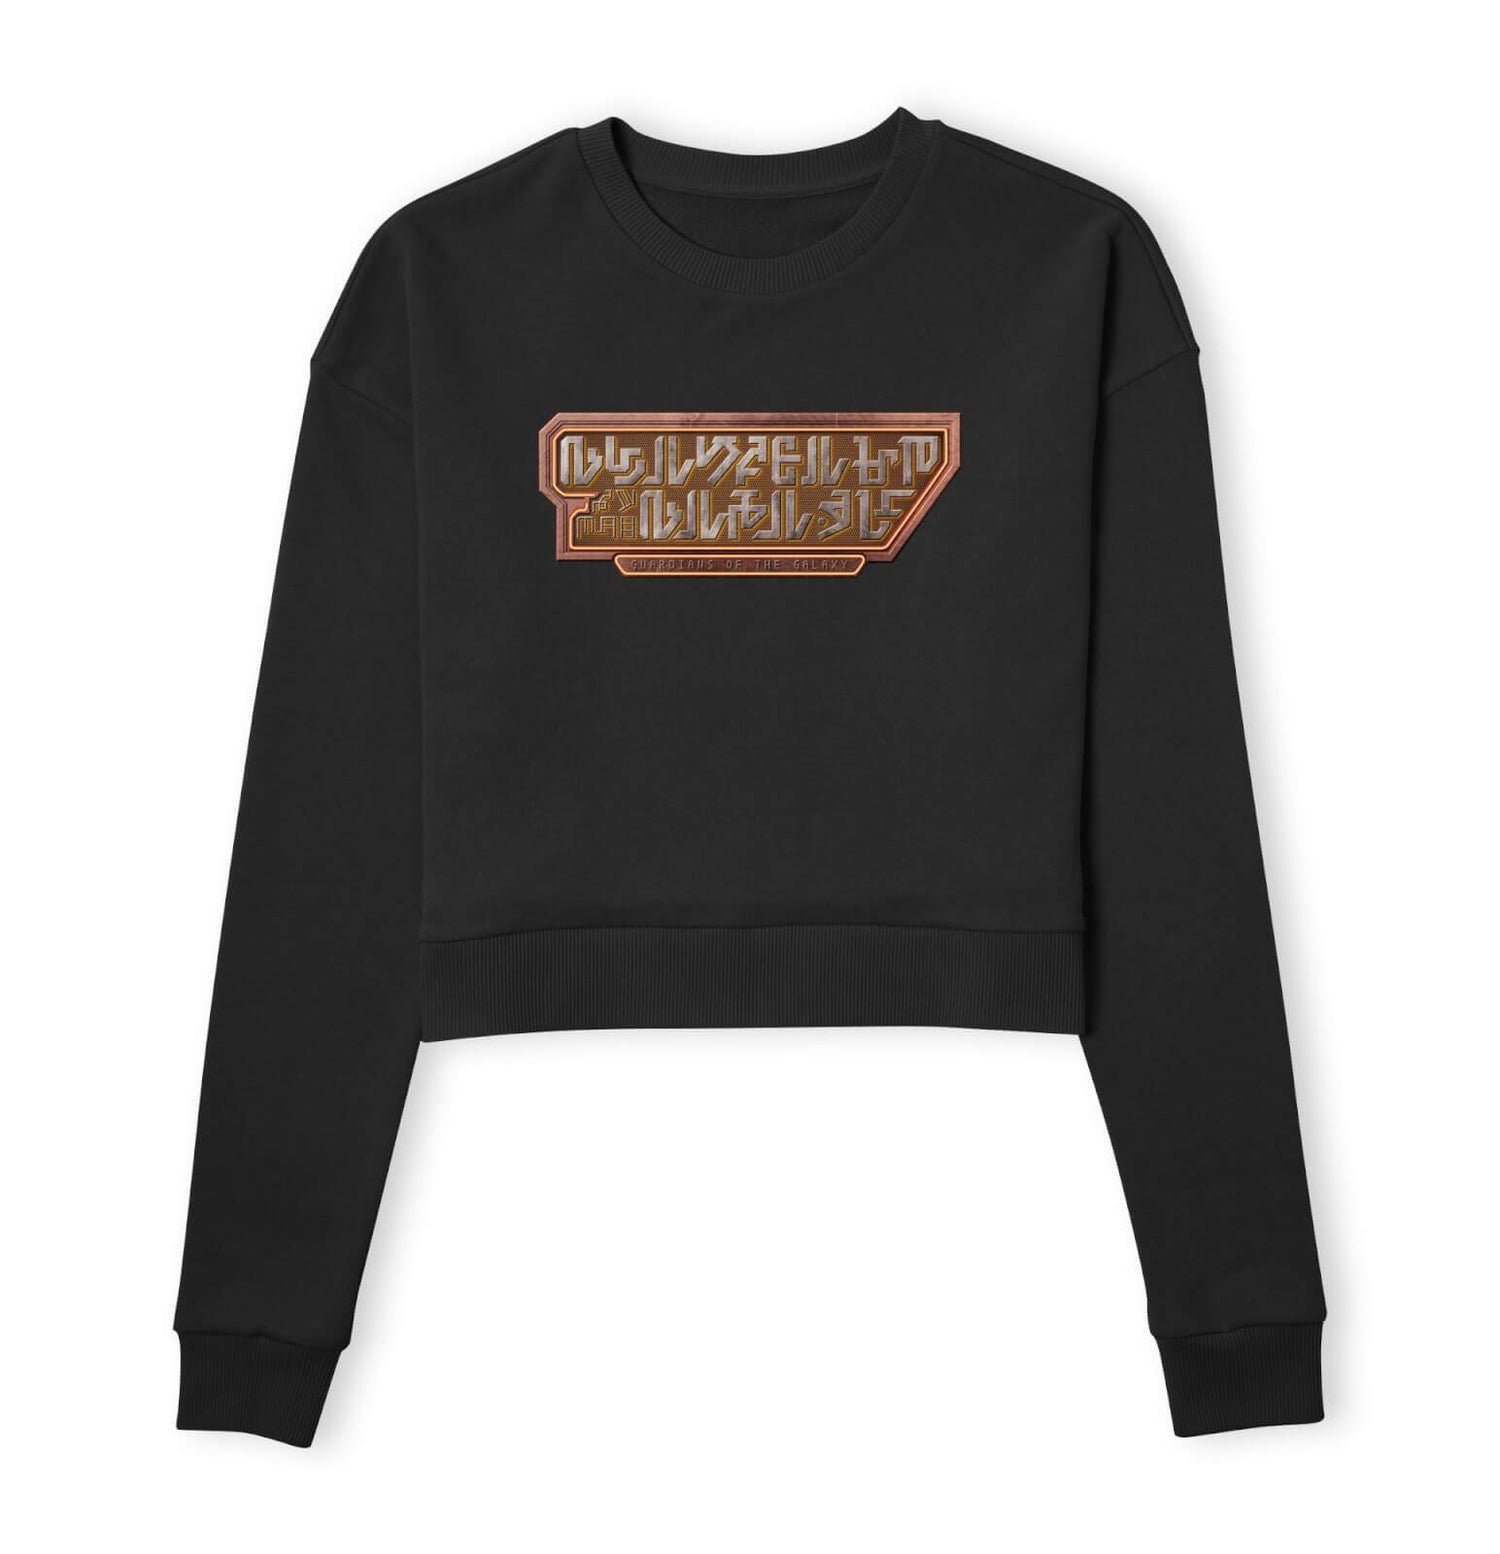 Guardians of the Galaxy Language Logo Women's Cropped Sweatshirt - Black